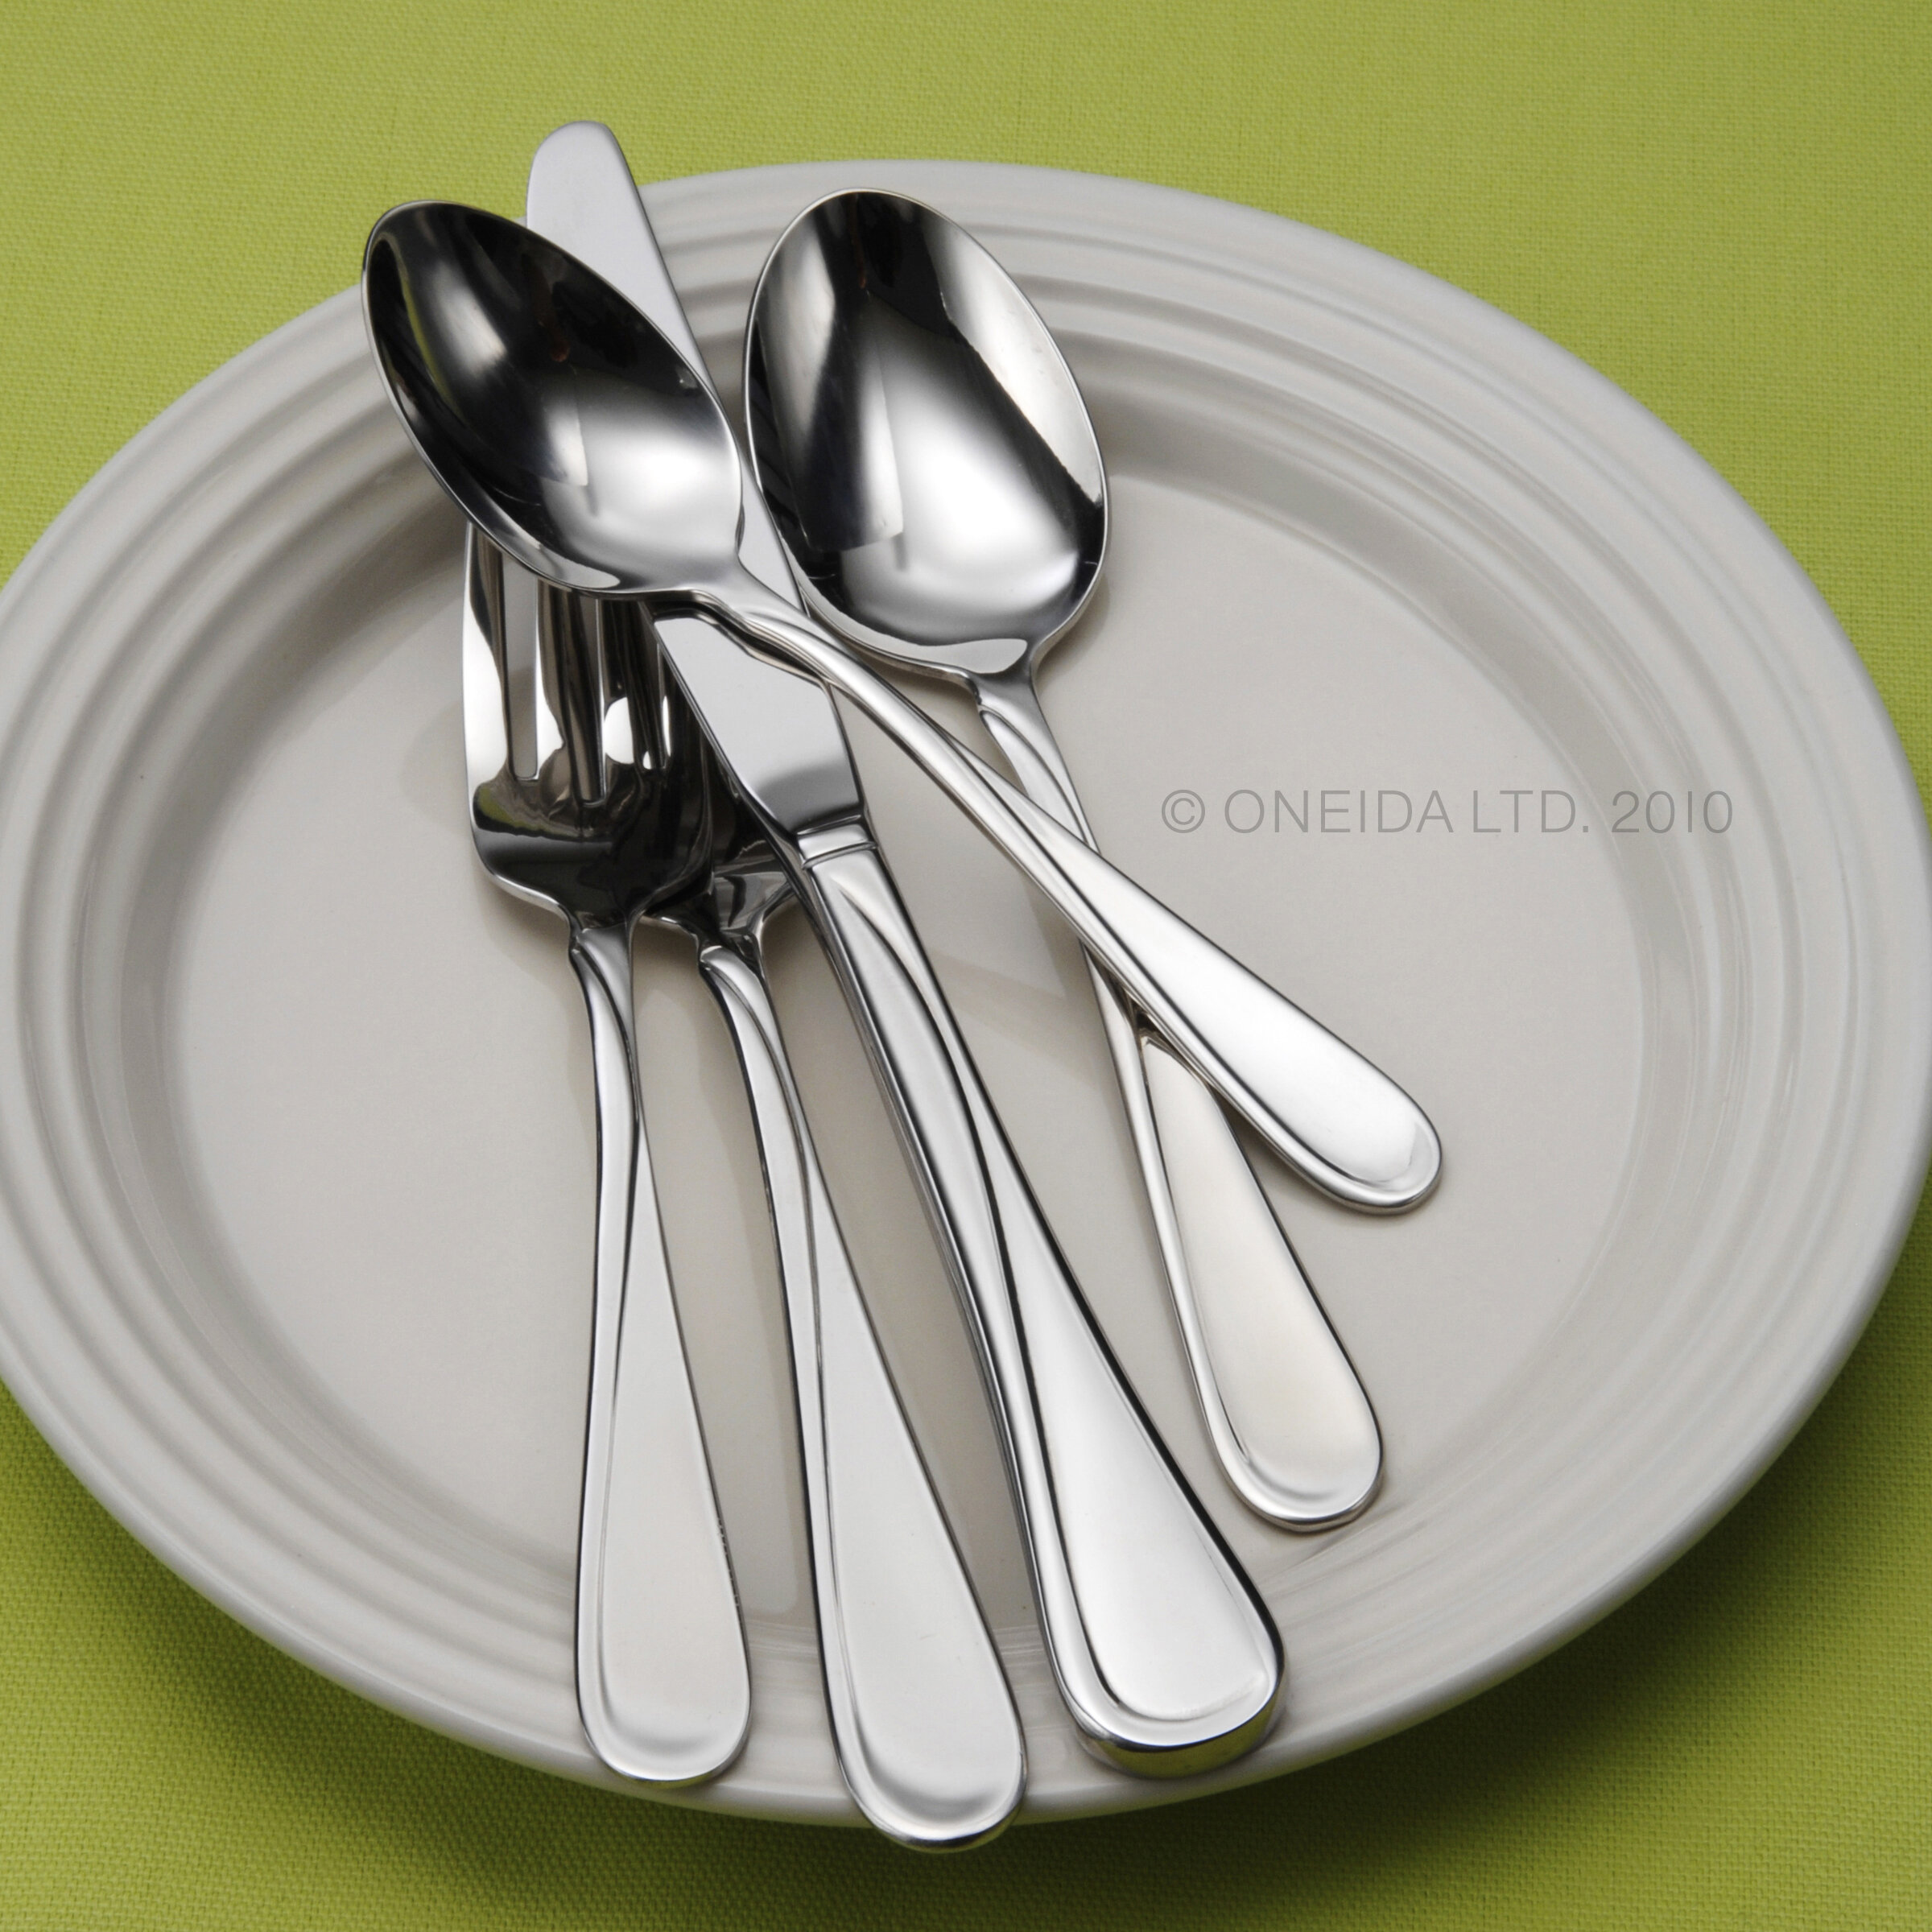 Herringbone Silverware Set by Olinda Flatware Set 20 pc Service for 4 18/10 Real Stainless Steel Spoon and Fork set